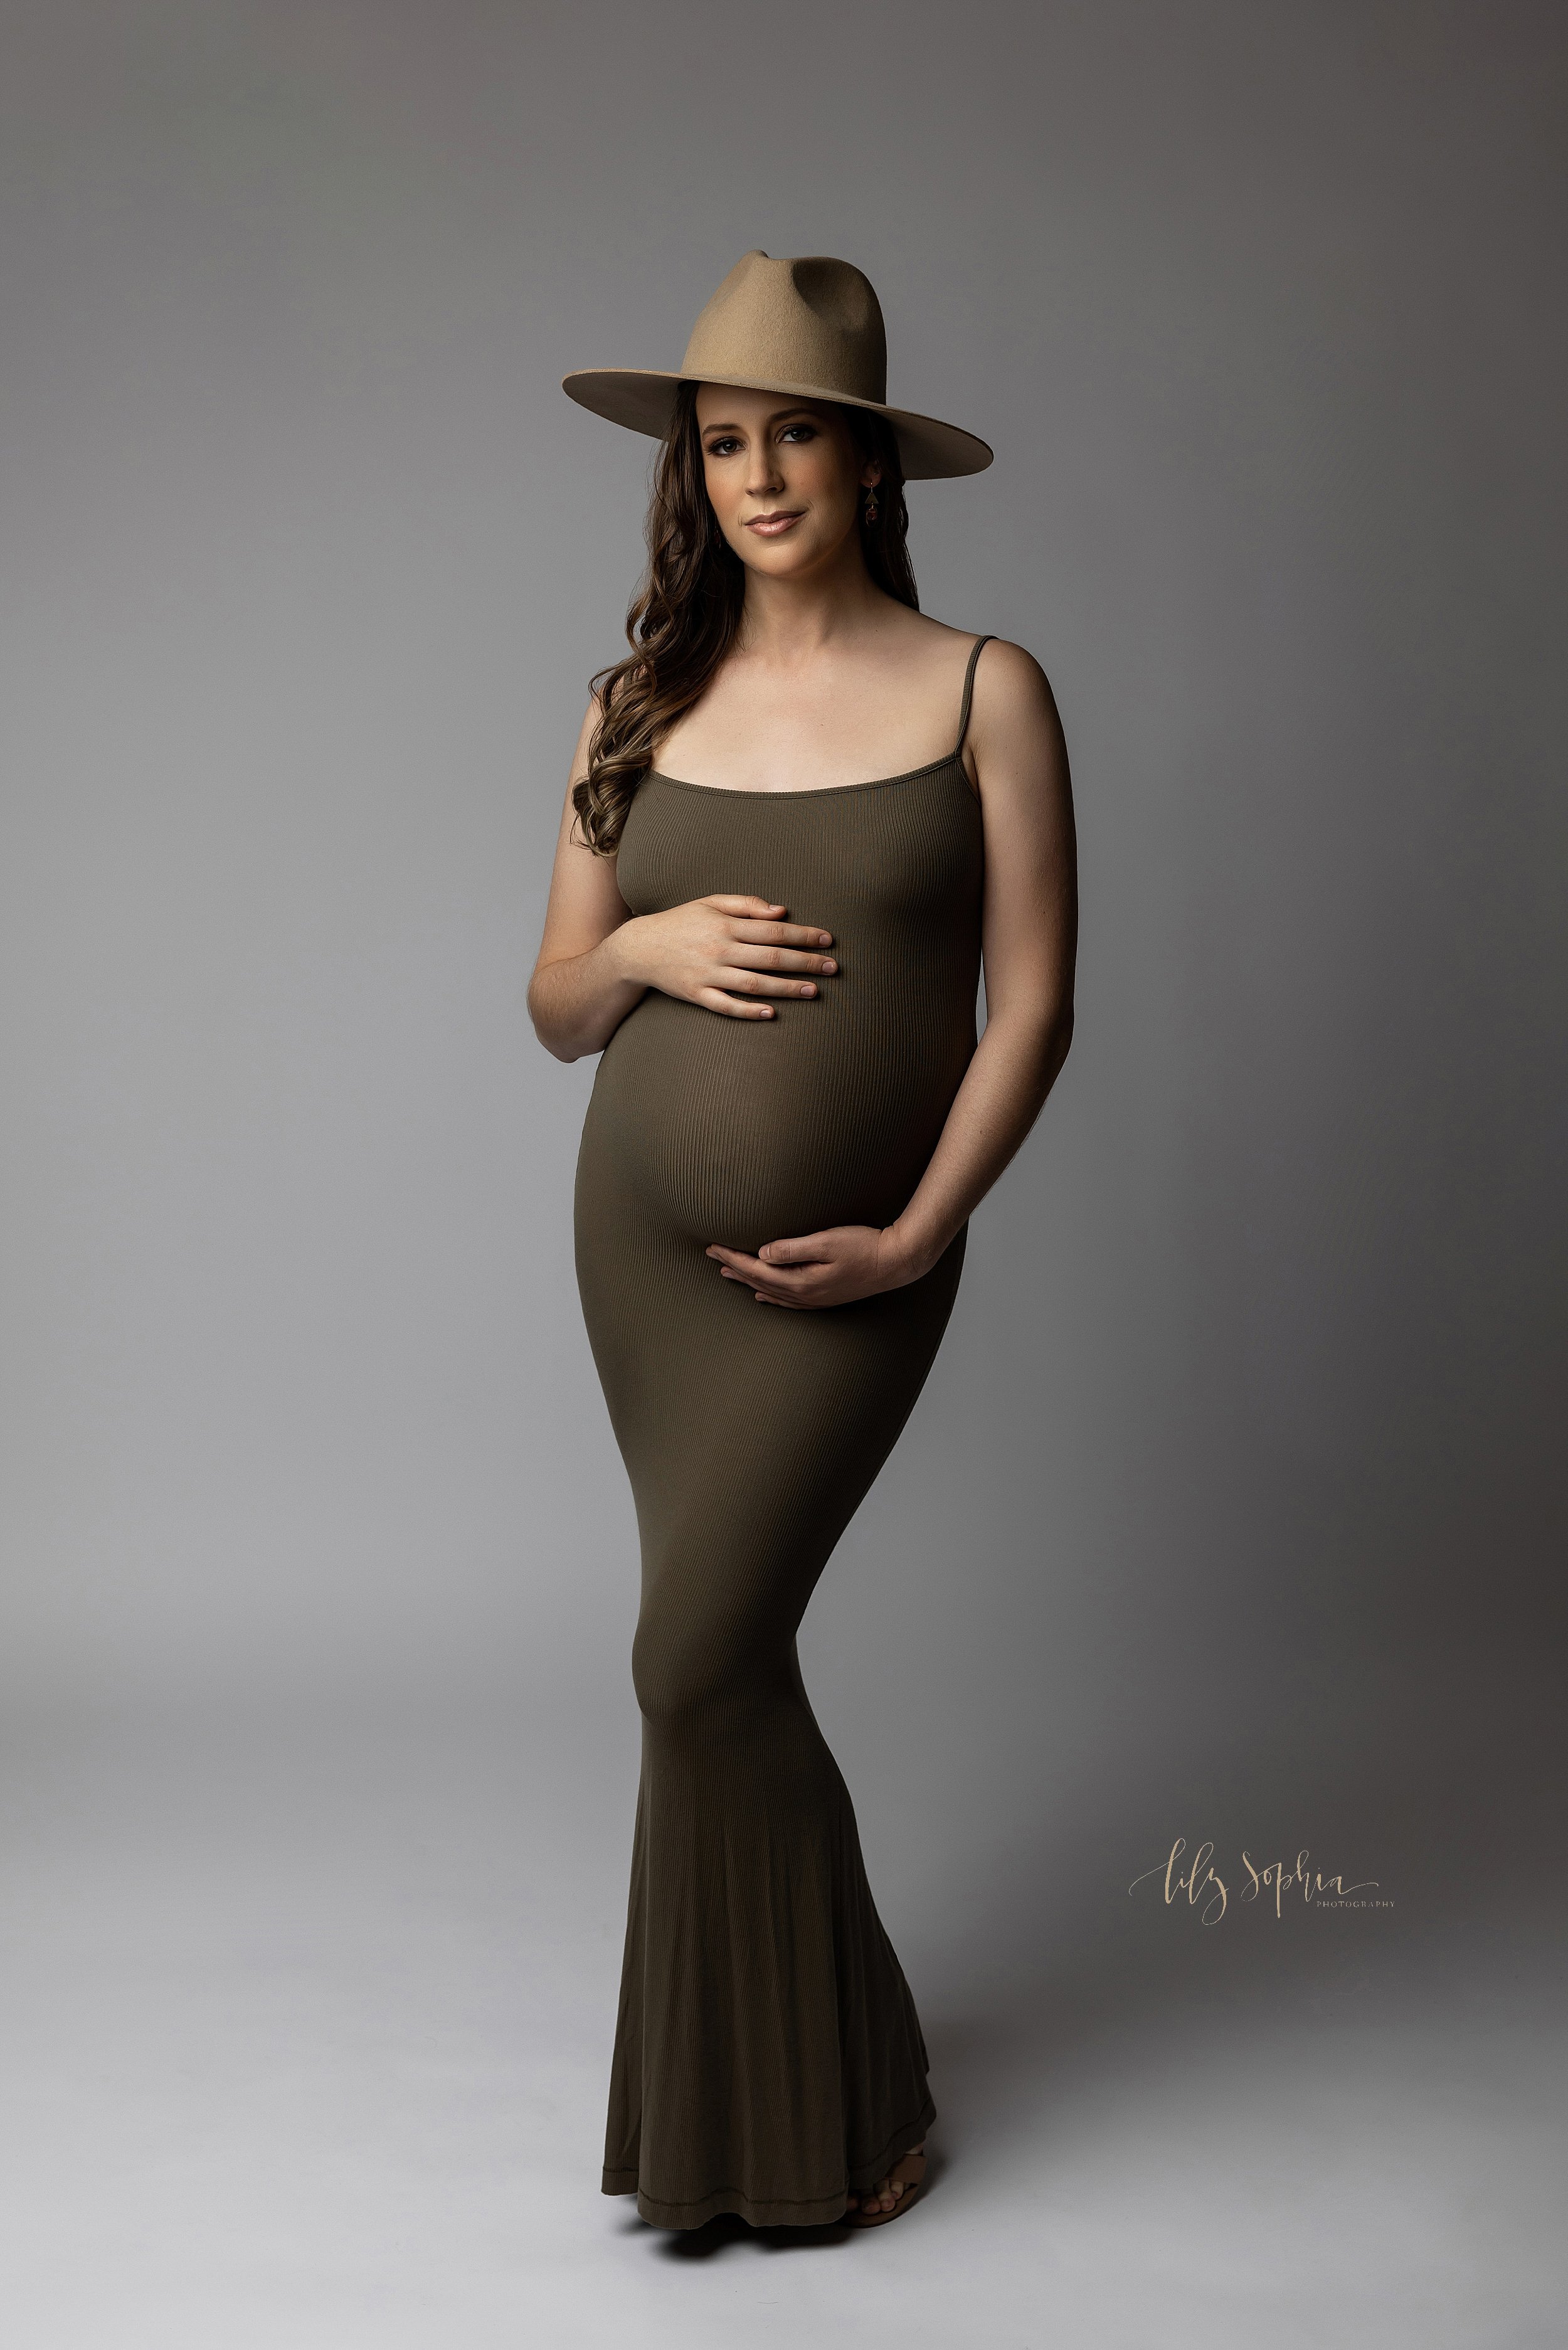 intown-atlanta-grant-park-kirkwood-decatur-modern-maternity-studio-fine-art-fashion-portraits-pregnancy-bodysuit-photos_0253.jpg